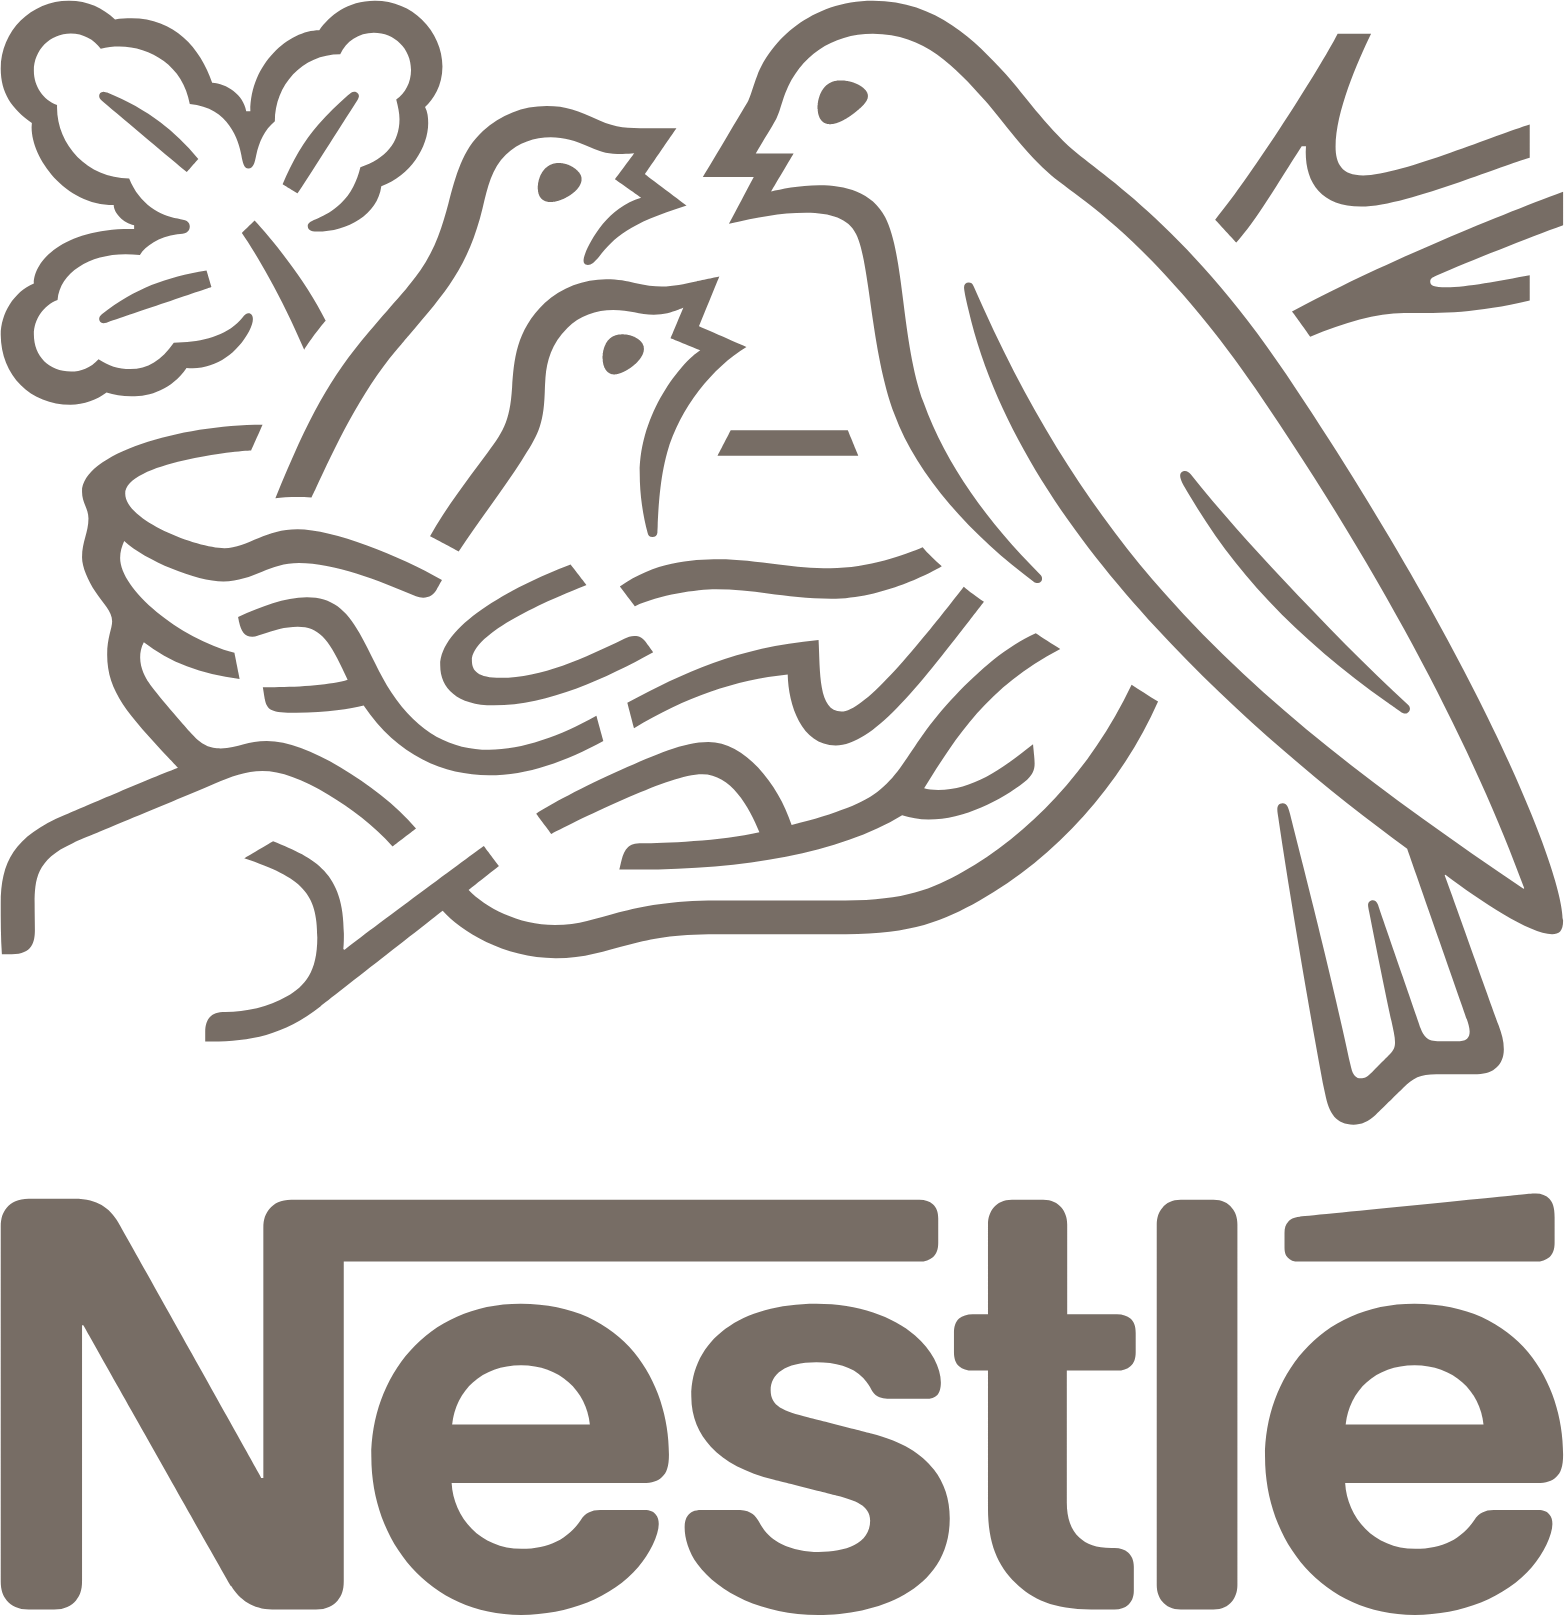 Nestlé India logo large (transparent PNG)